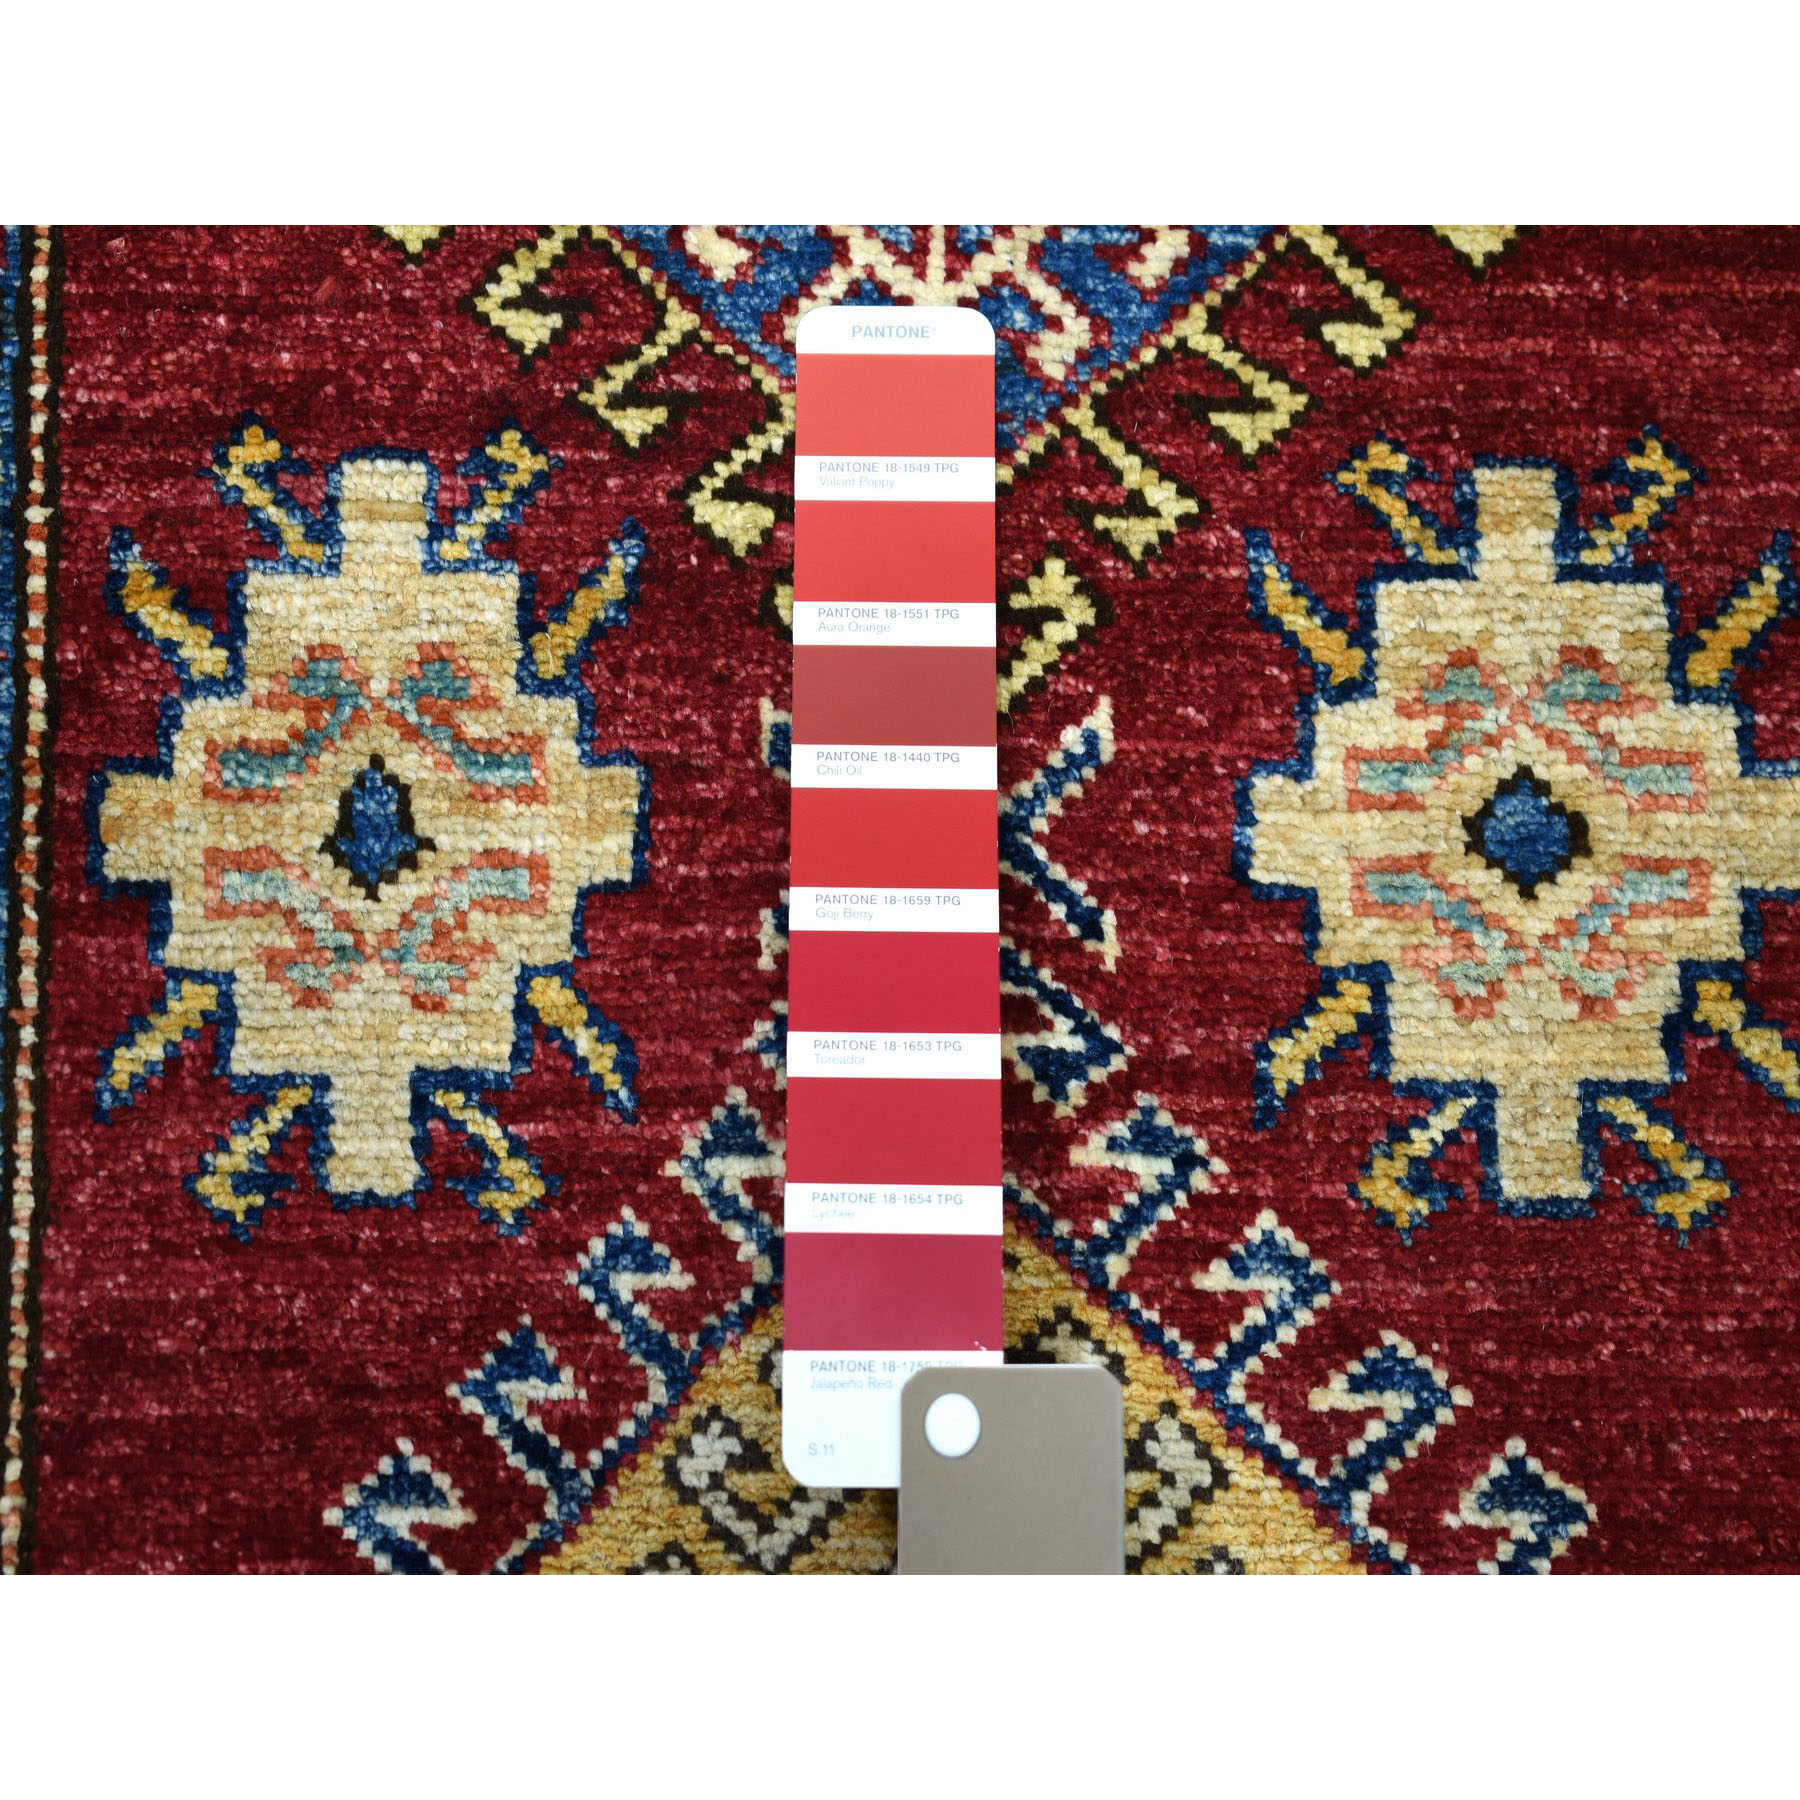 2'9"x20'3" Red Super Kazak Geometric Design XL Runner Pure Wool Hand Woven Oriental Rug 